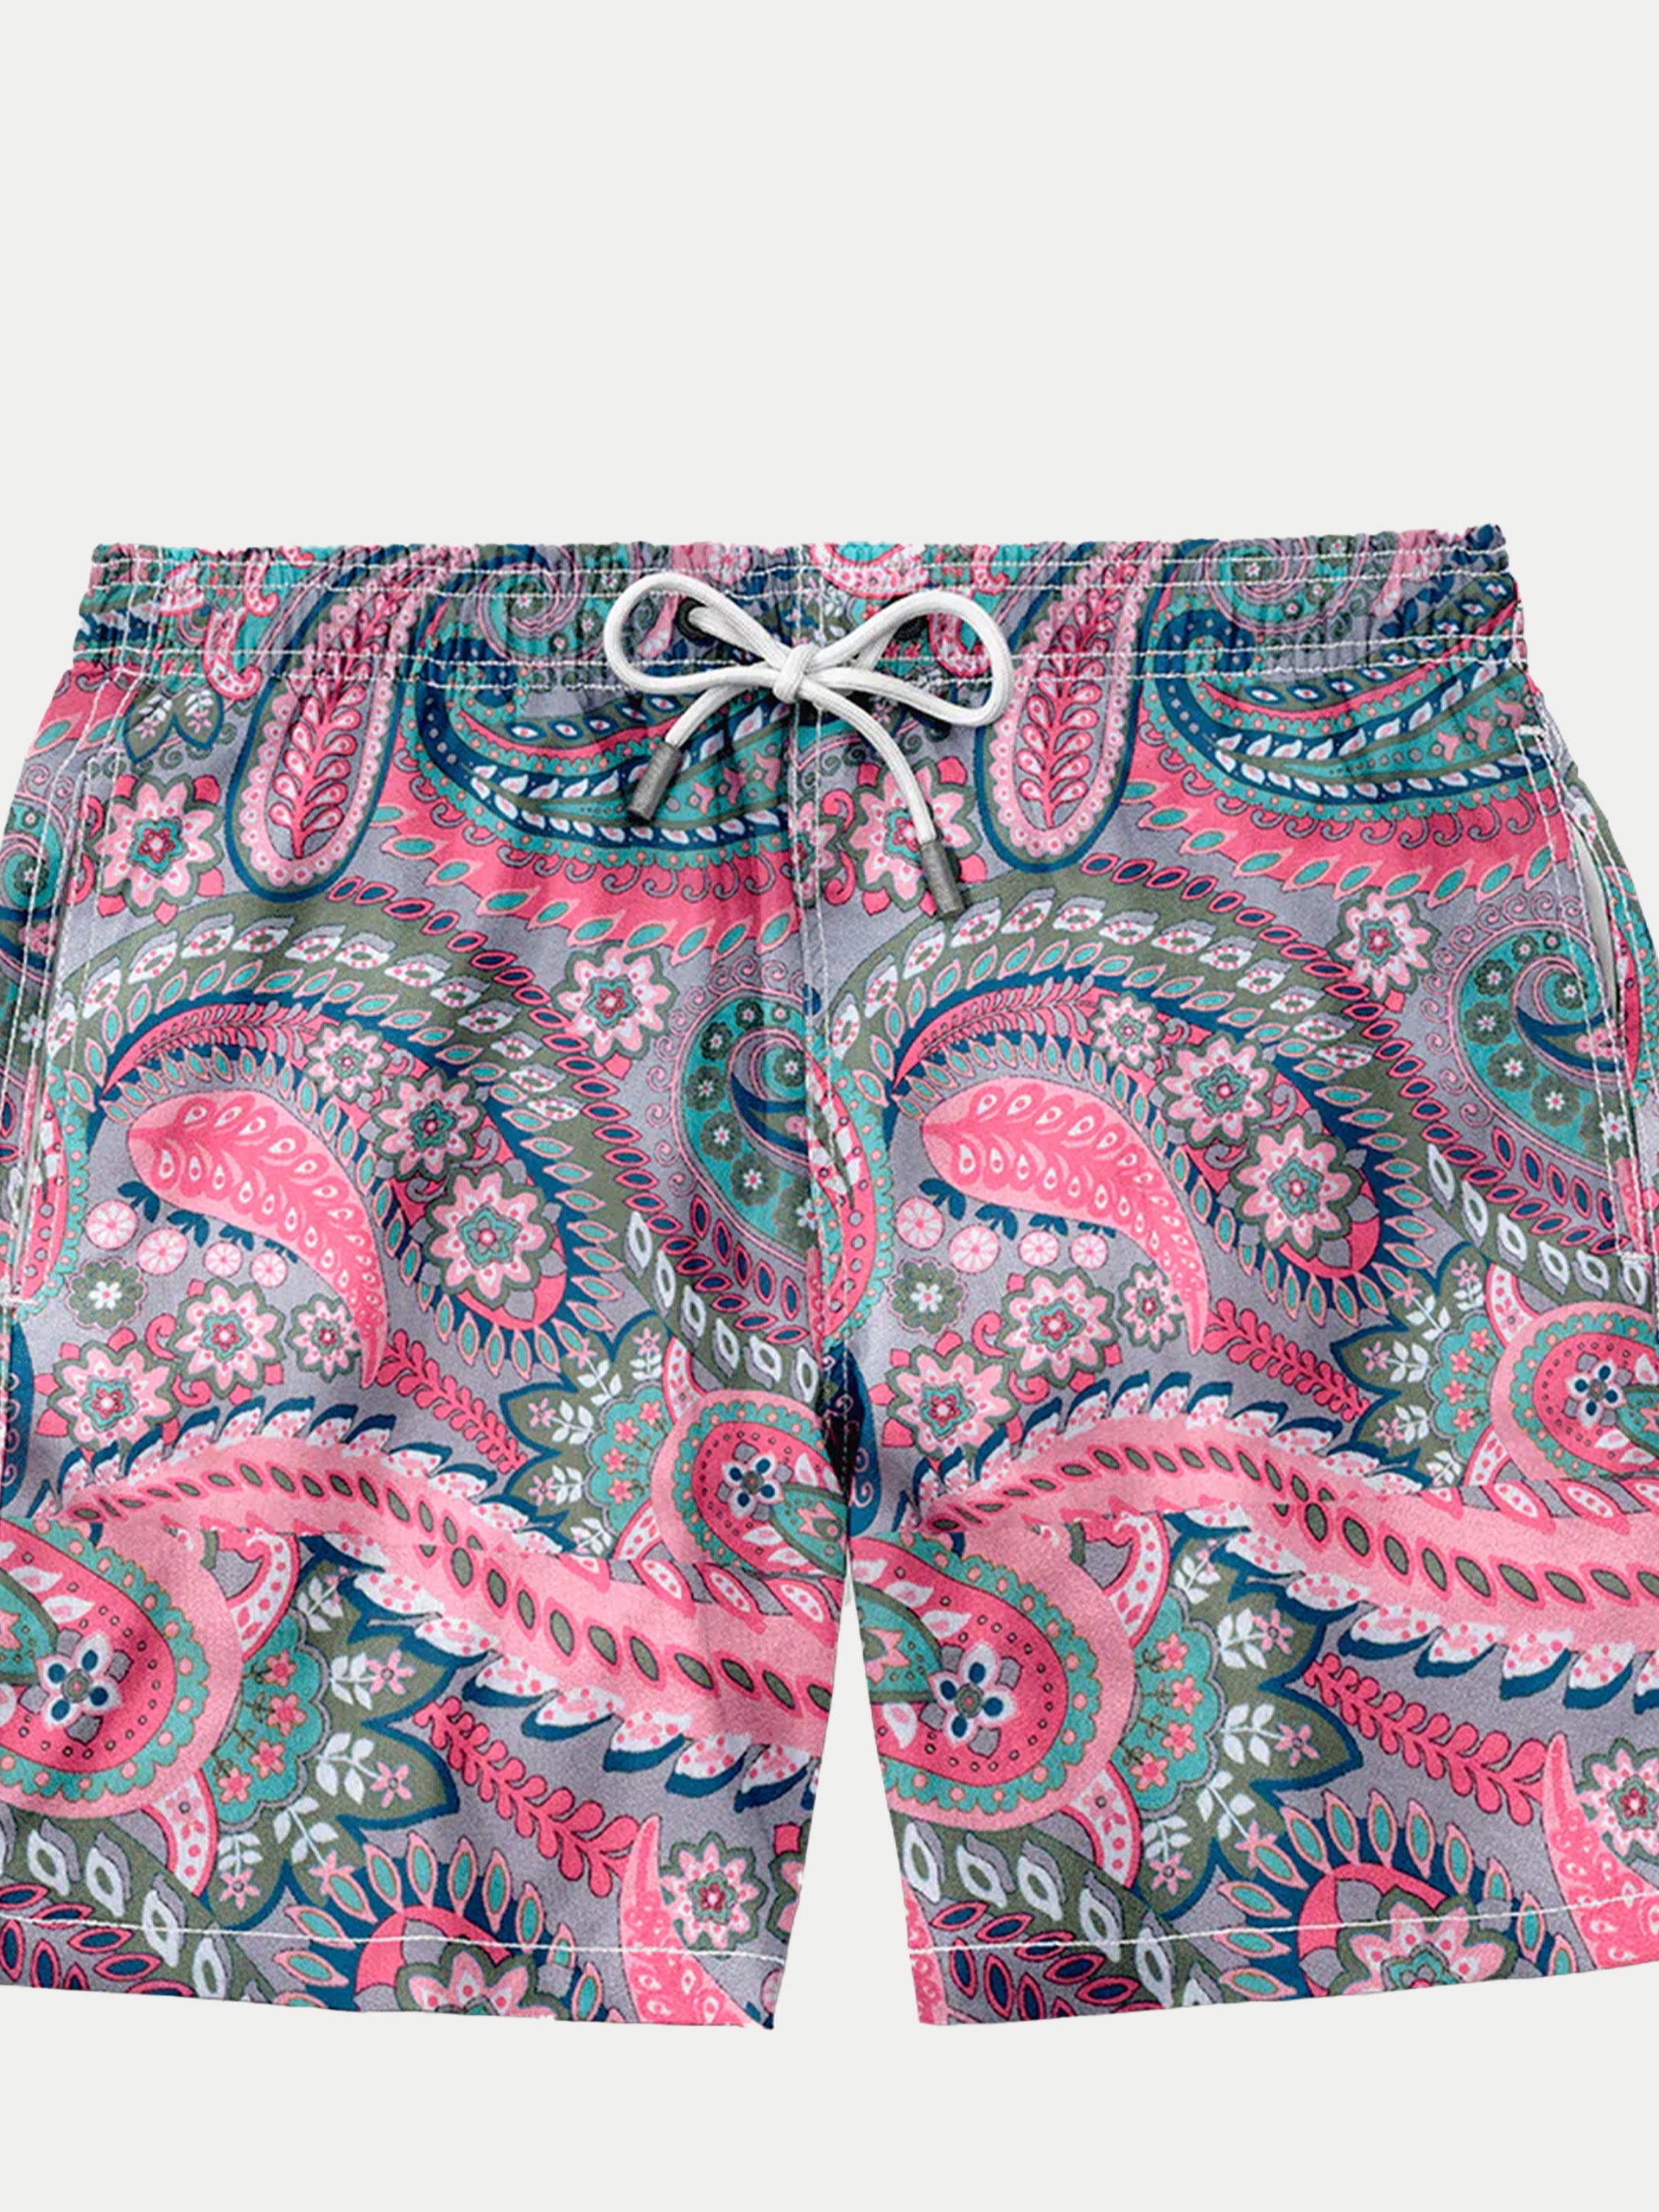 'Pink Paisley' Boys Swim Shorts by 98 Coast Av